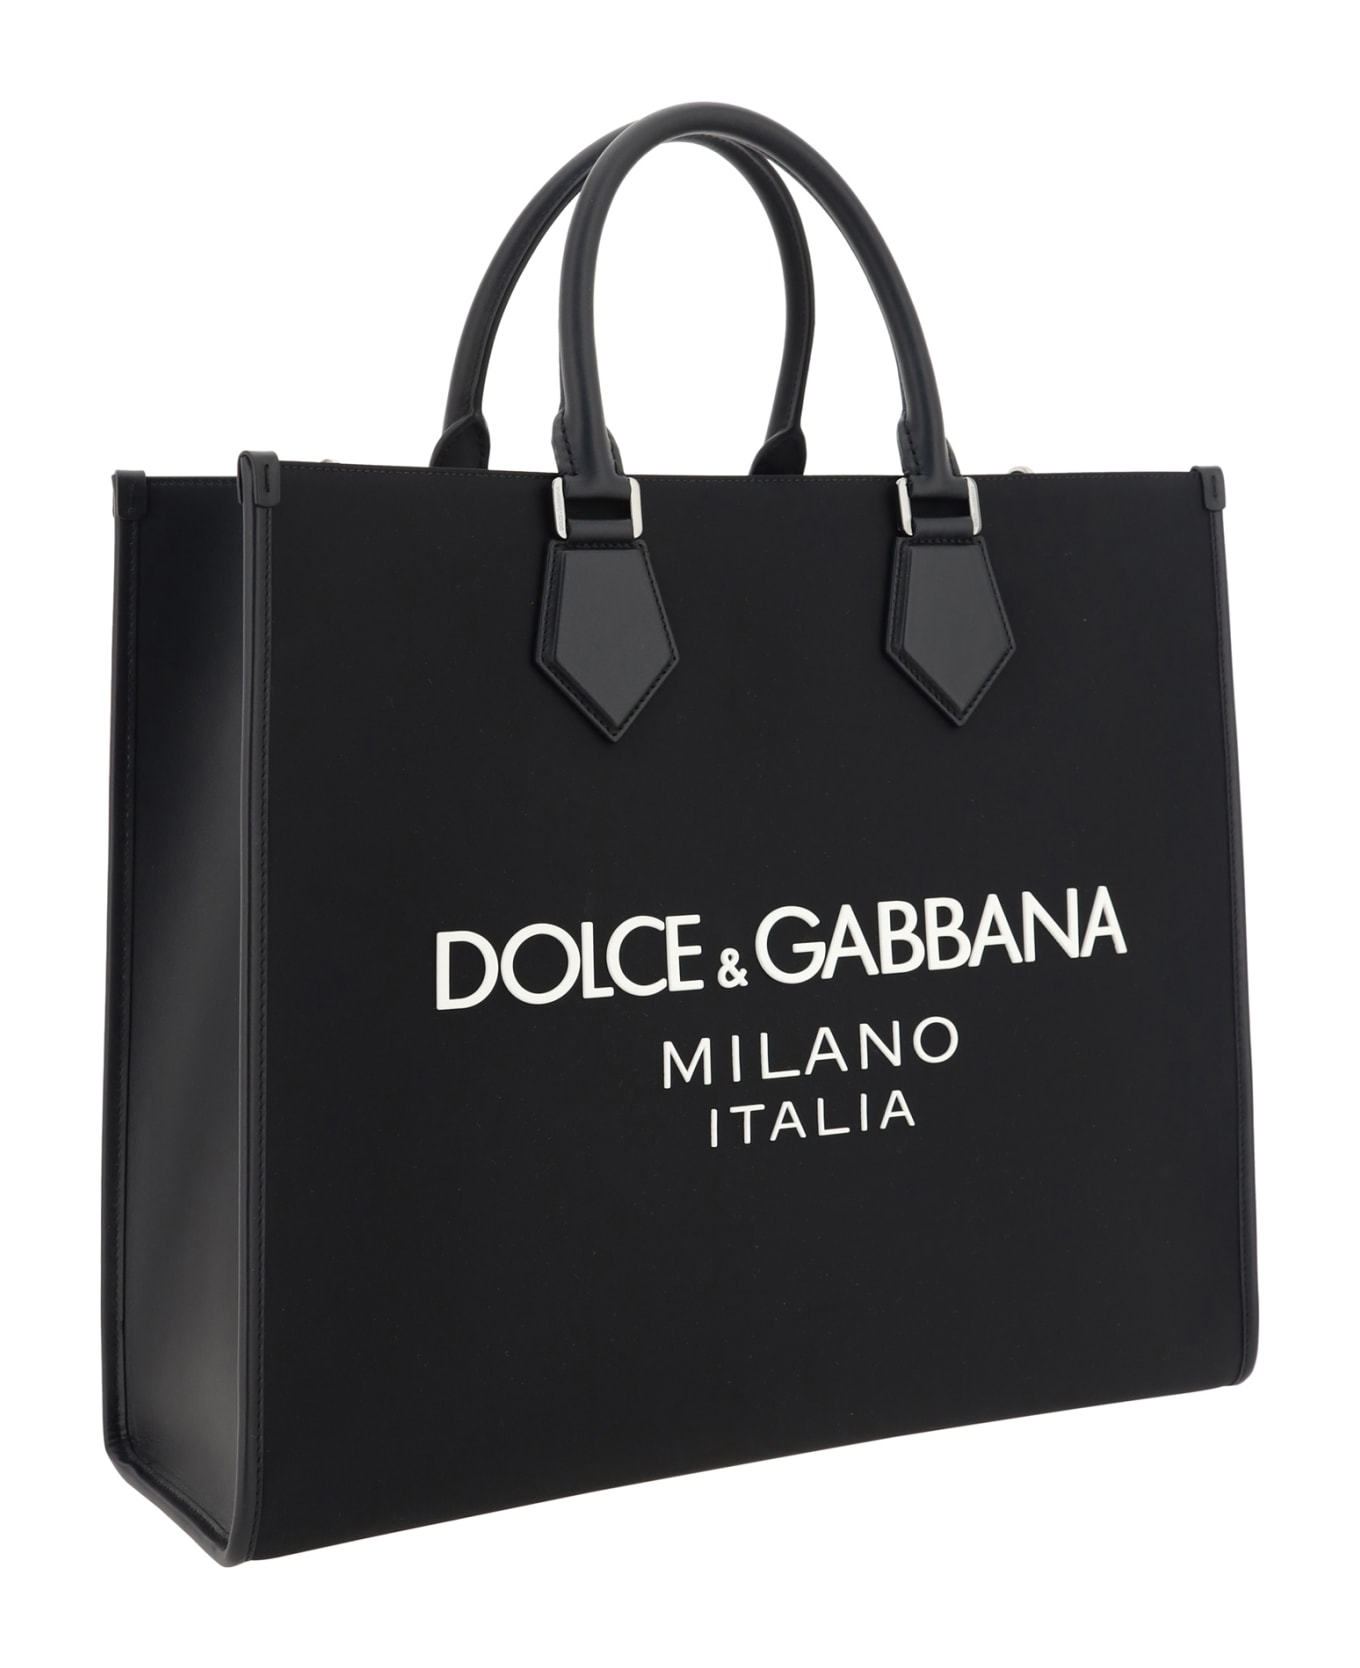 Dolce & Gabbana Tote Bag - Nero/nero トートバッグ